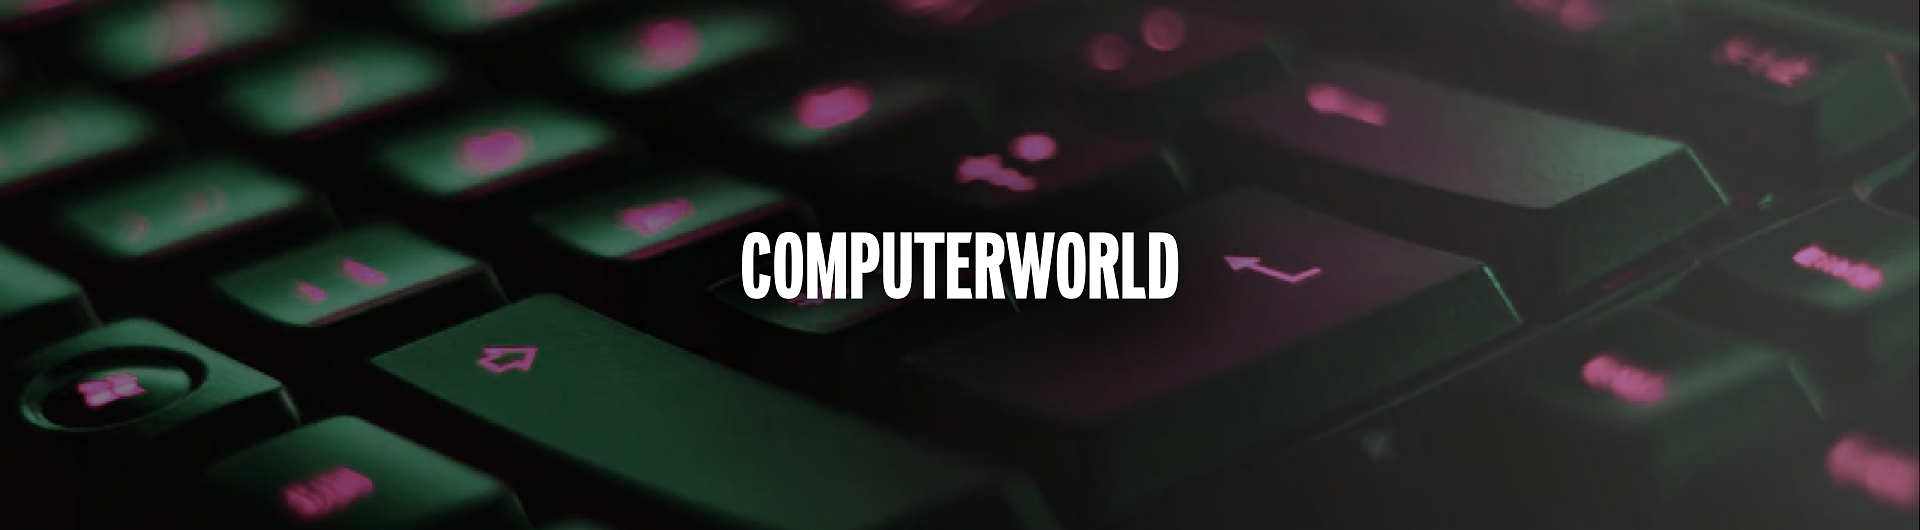 COMPUTERWORLD